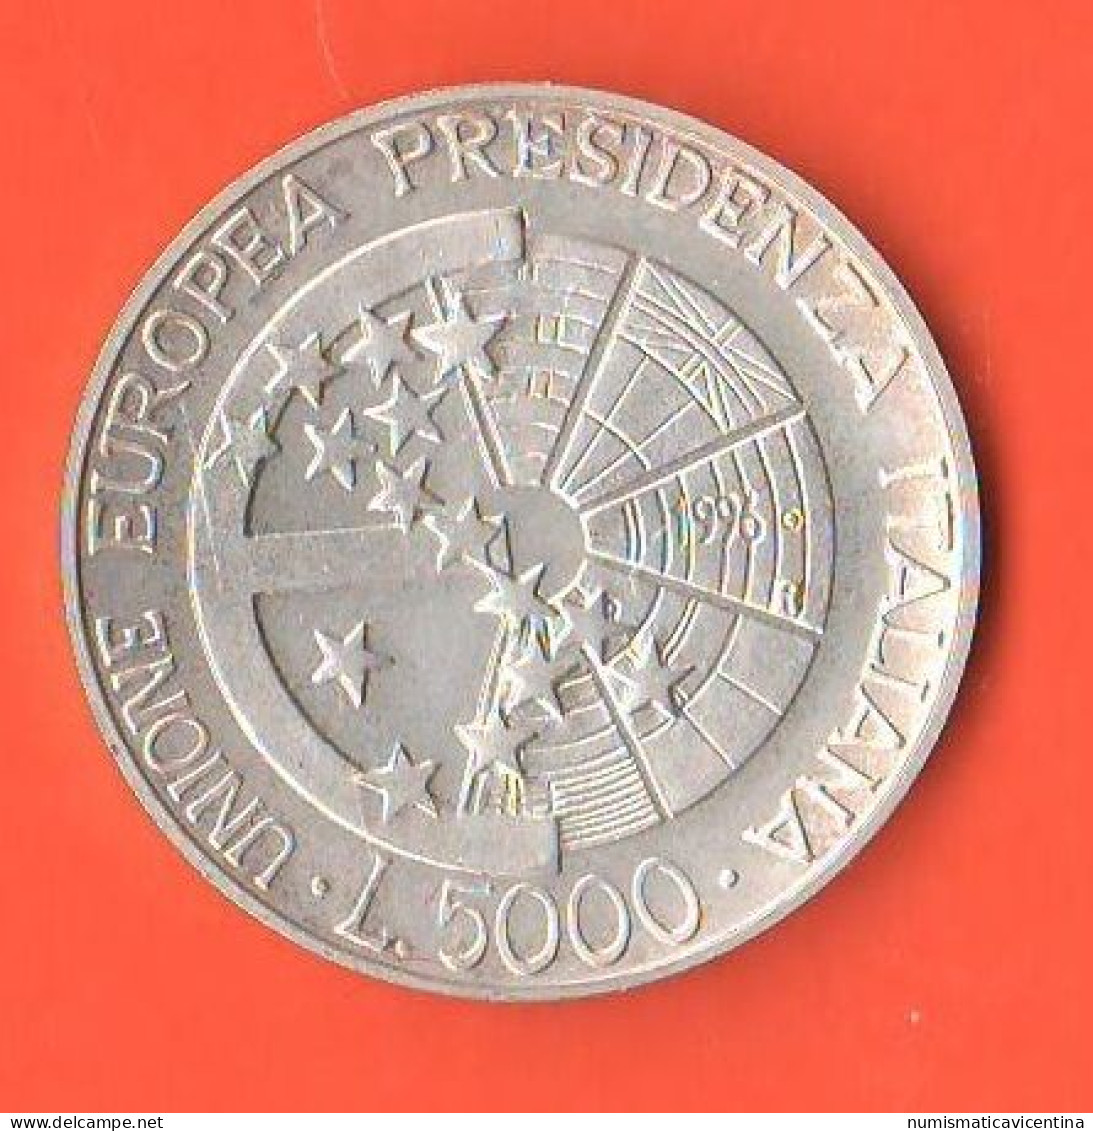 Italia 5000 Lire 1996 Presidenza Cee Italian Presidency European Union Italy Italie Silver Coin - Commemorative